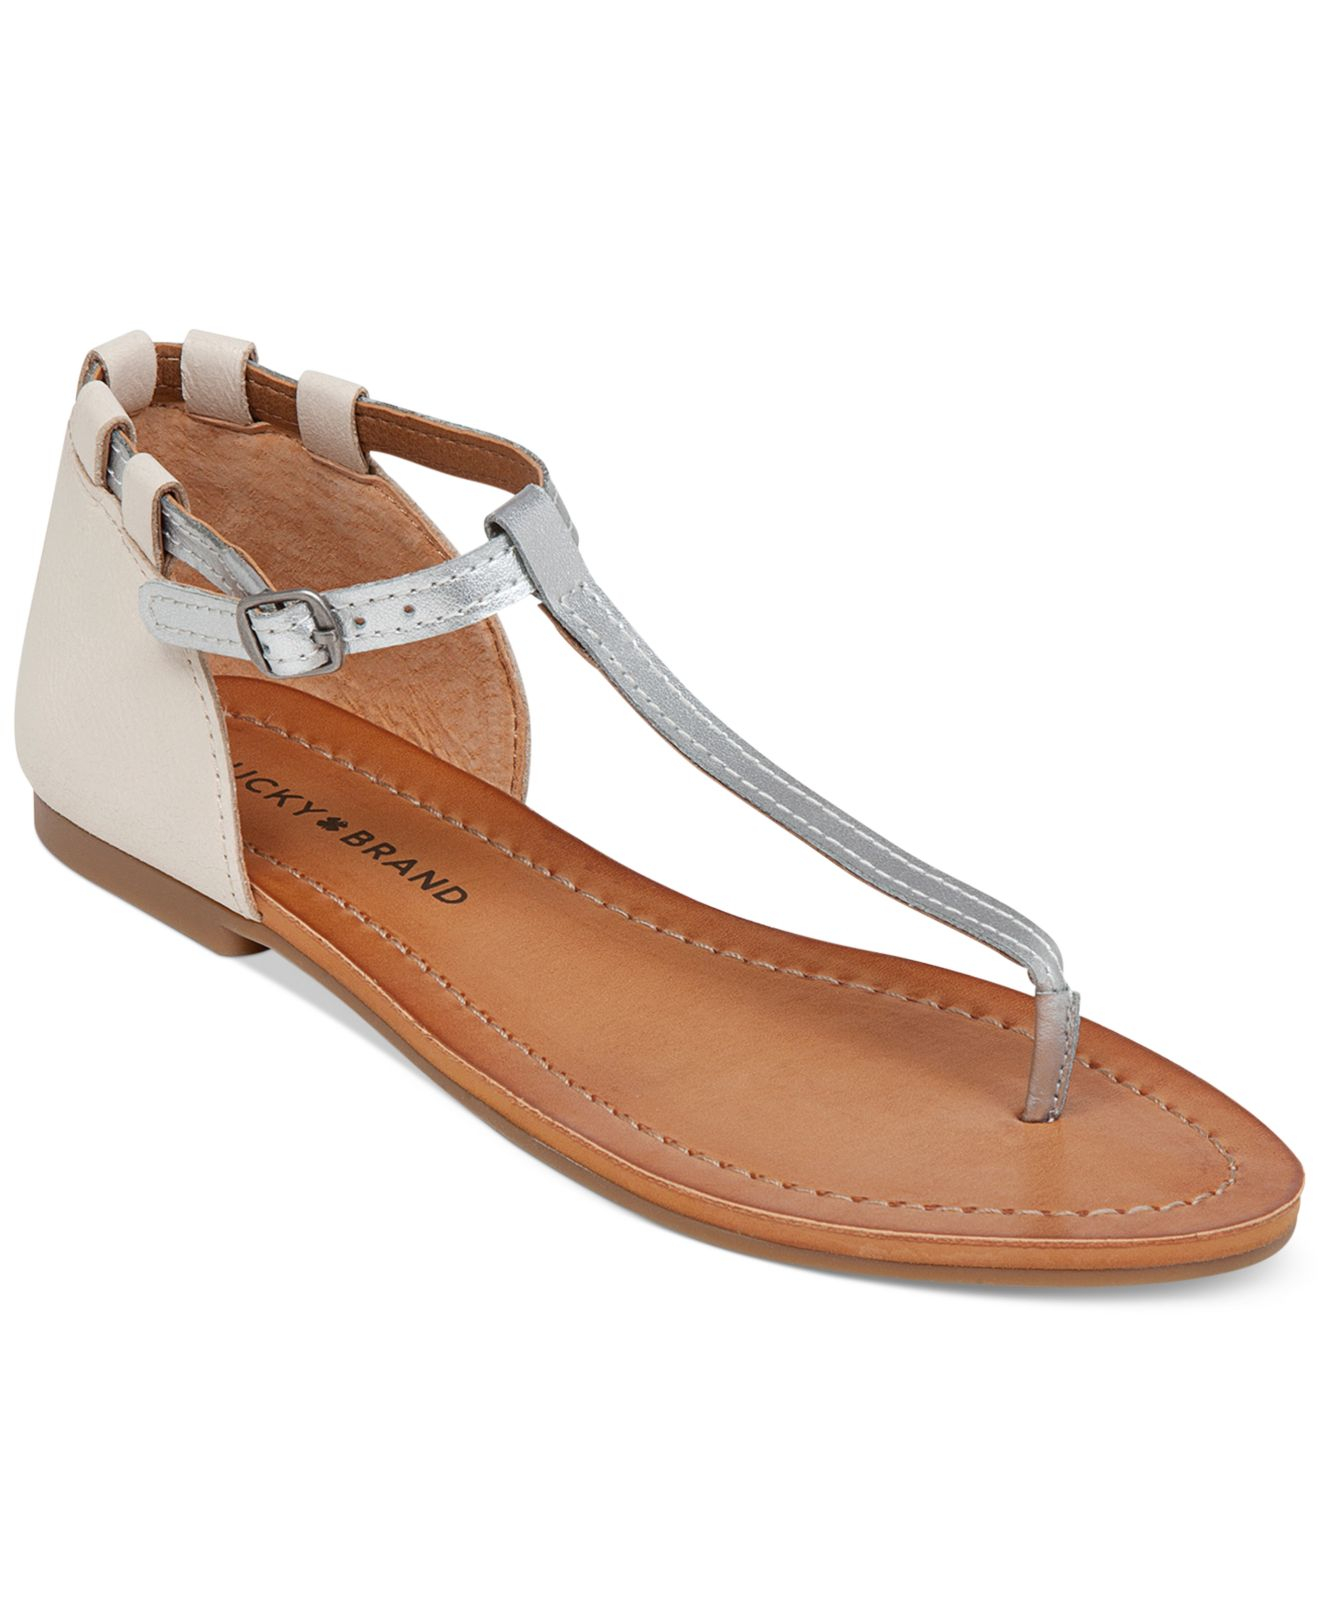 Lyst - Lucky brand Ezzra T-strap Flat Thong Sandals in Metallic